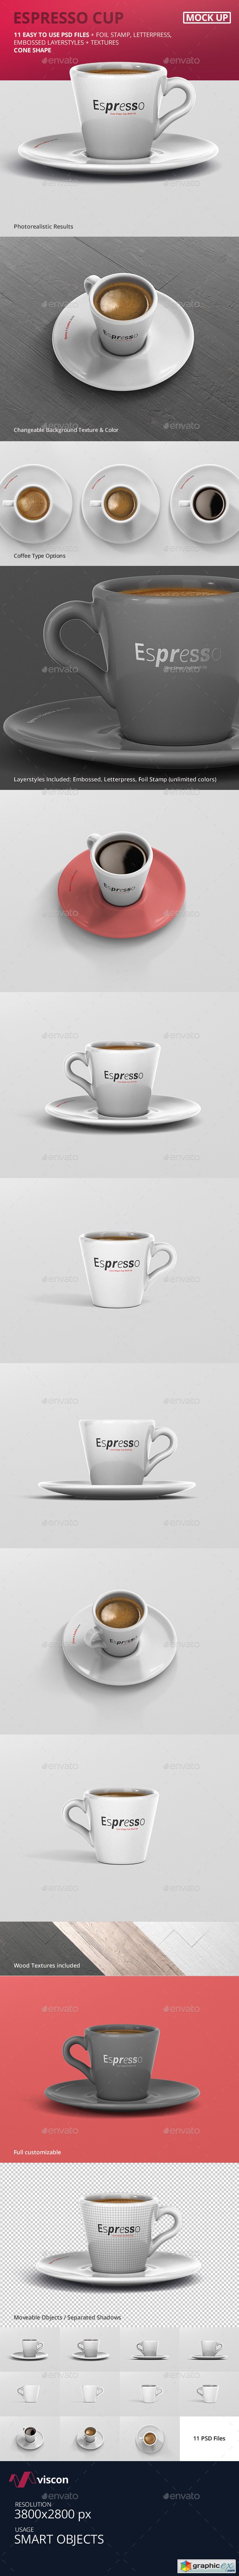 Espresso Cup Mockup - Cone Shape